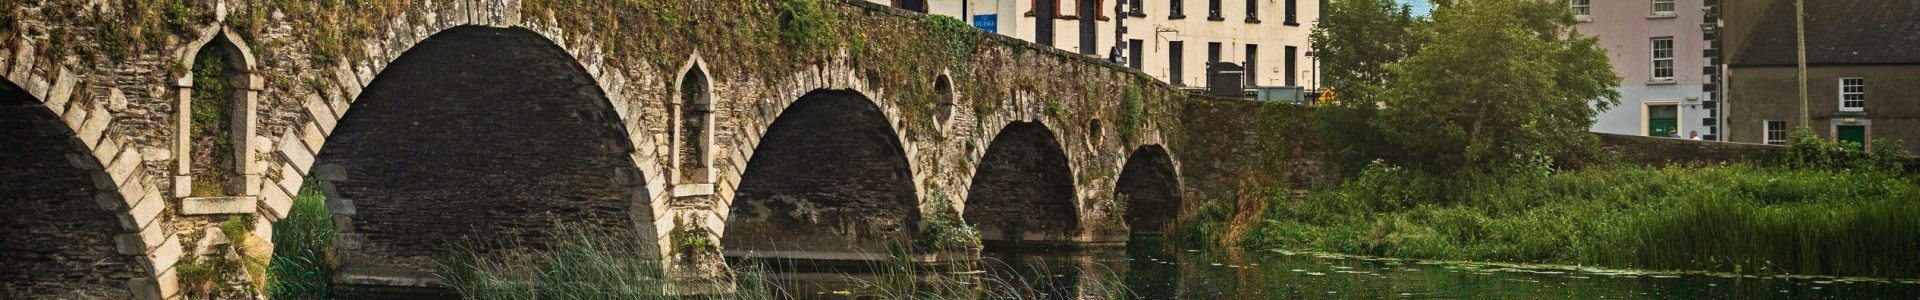 The 18th century stone bridge over the River Barrow at Graiguenamanagh, County Kilkenny, Ireland. BR014